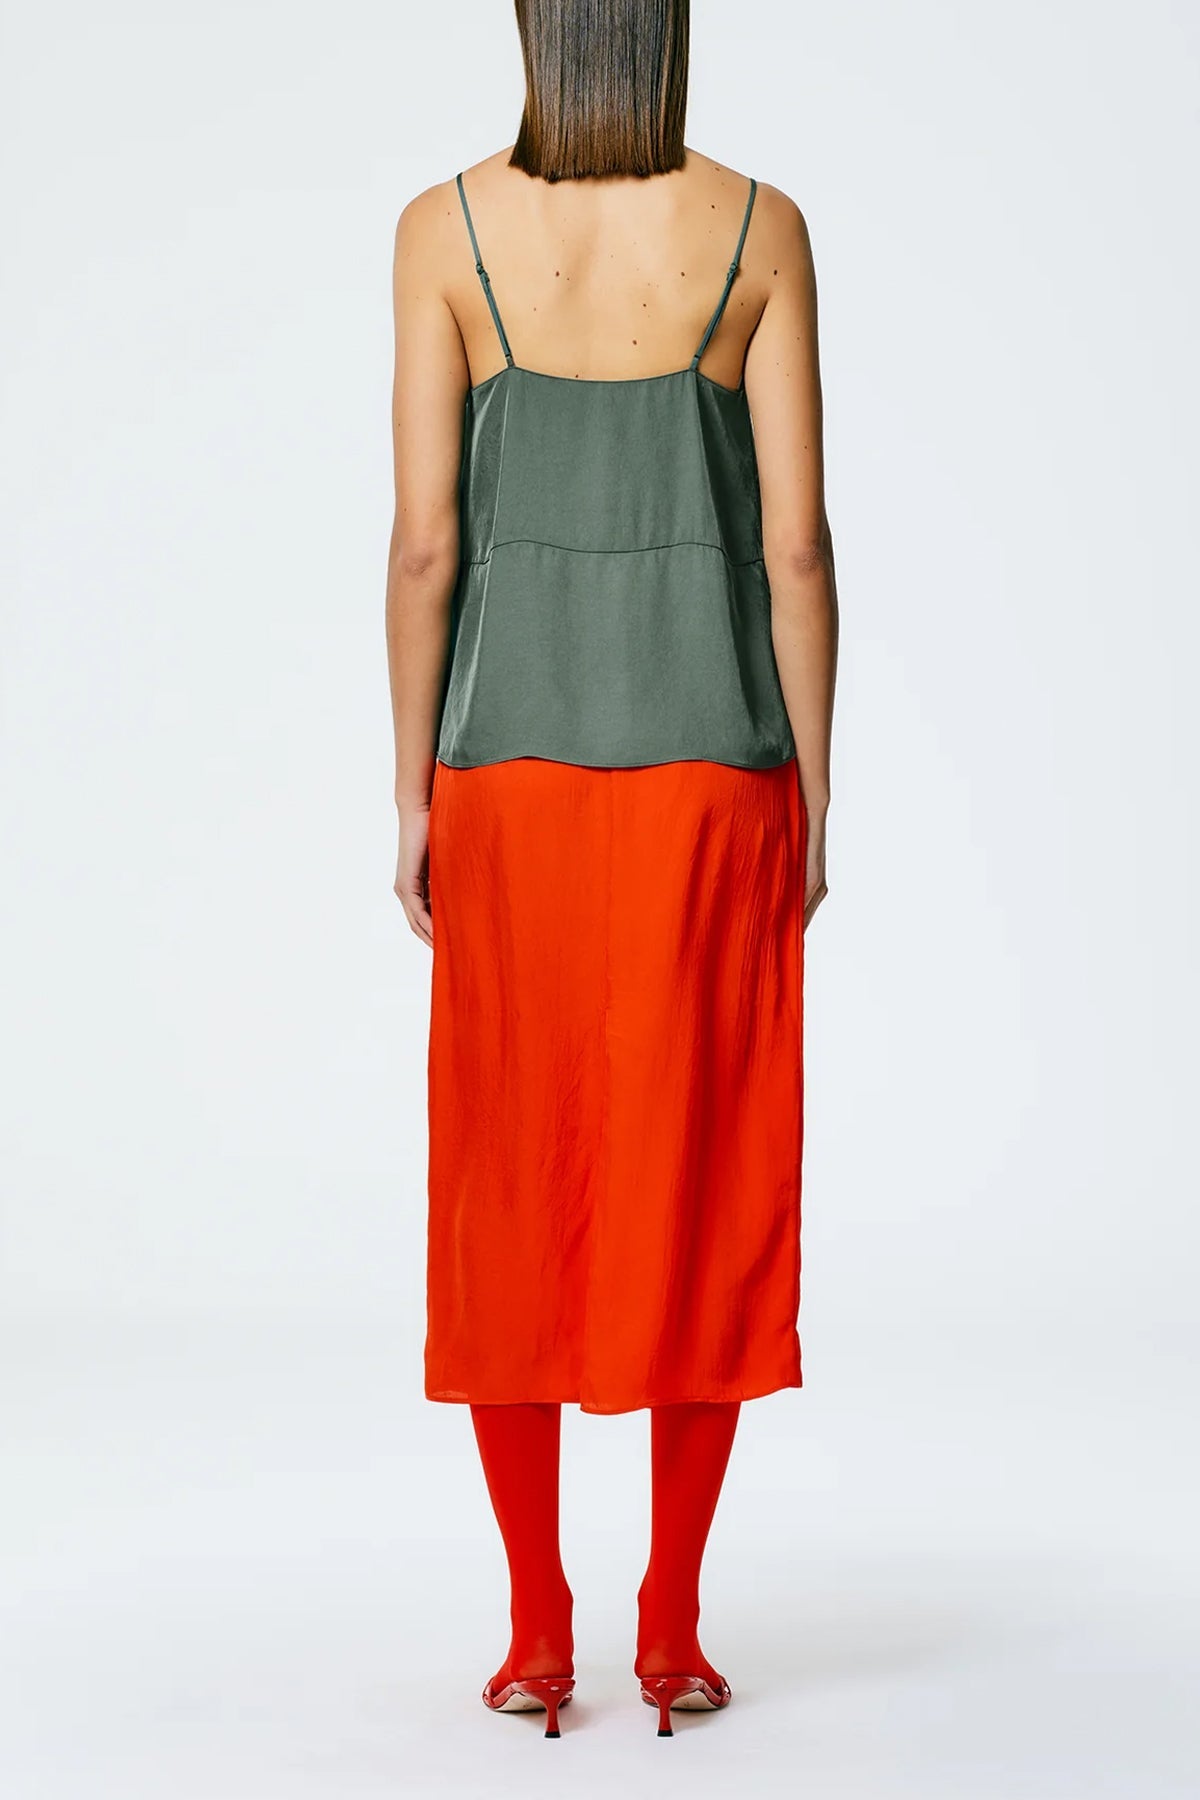 The Slip Skirt in Red - shop-olivia.com